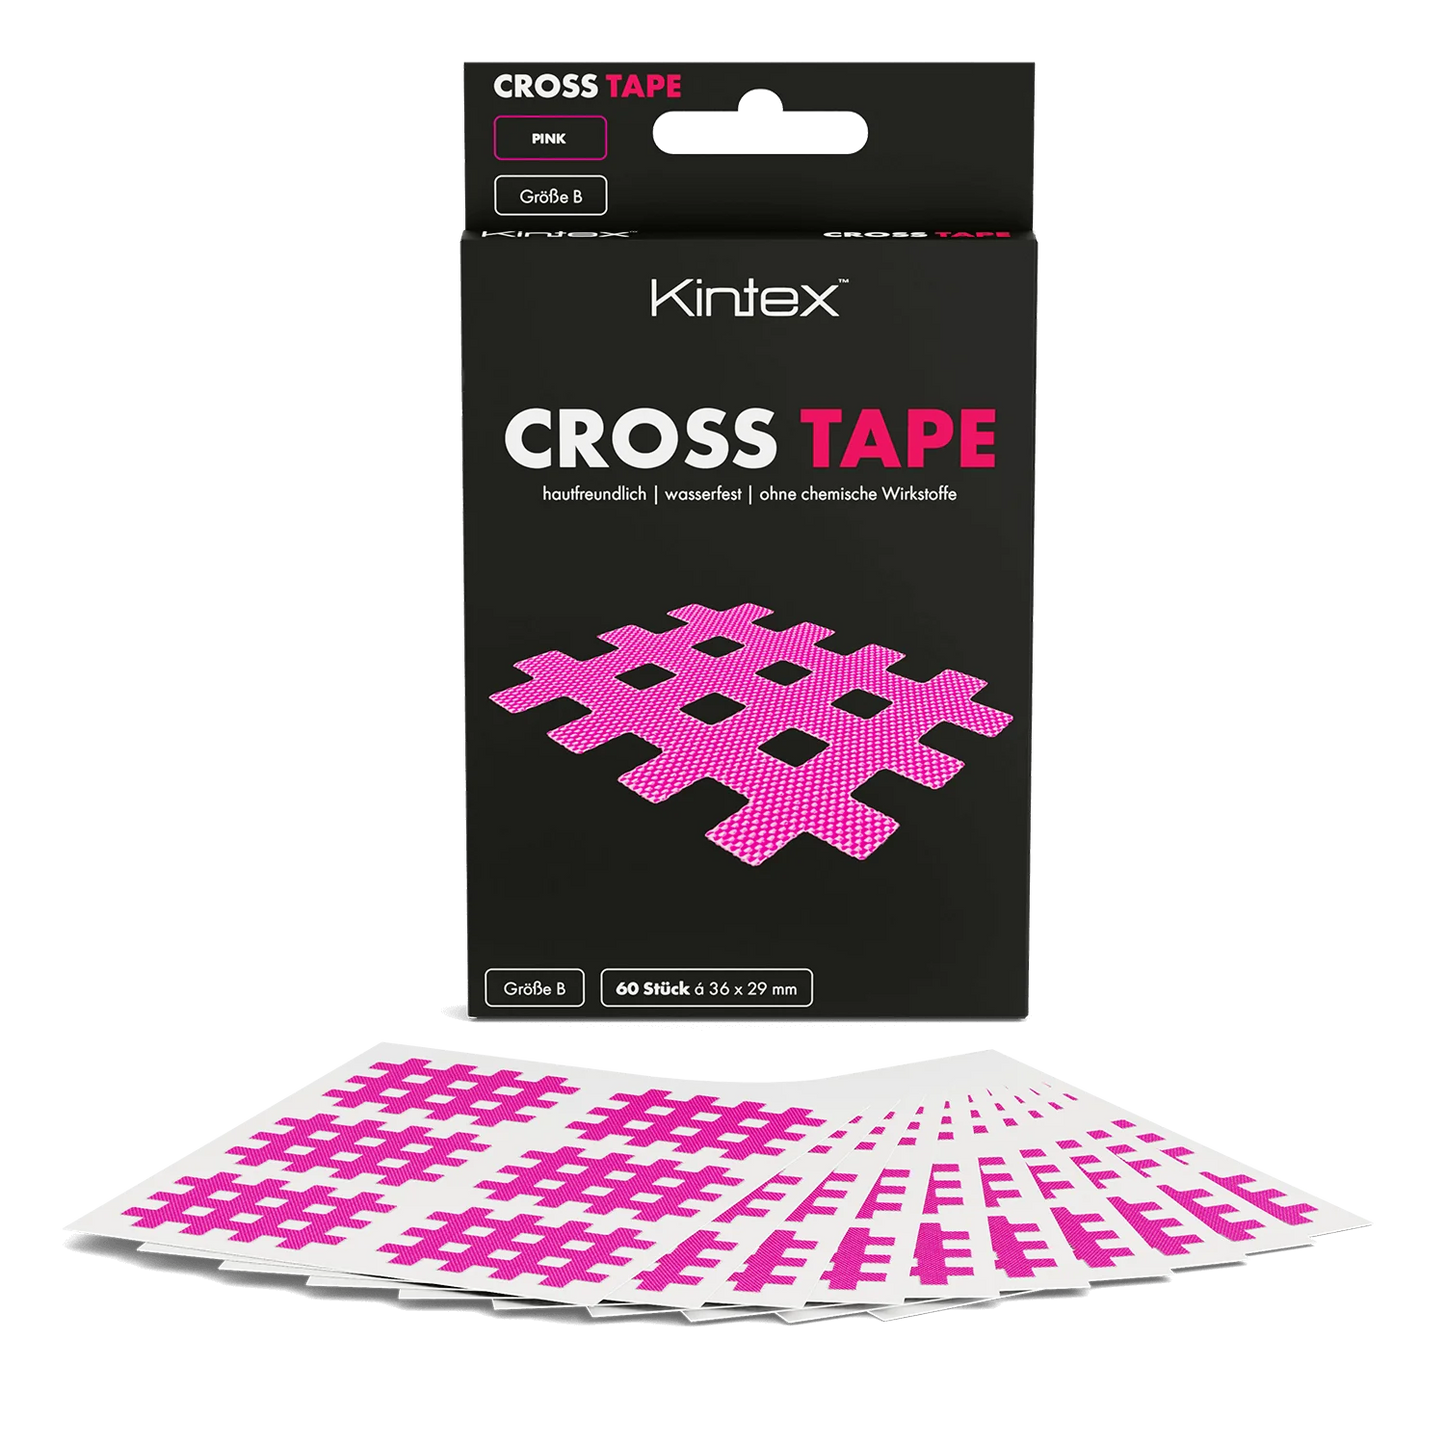 Cross Tape Größe A